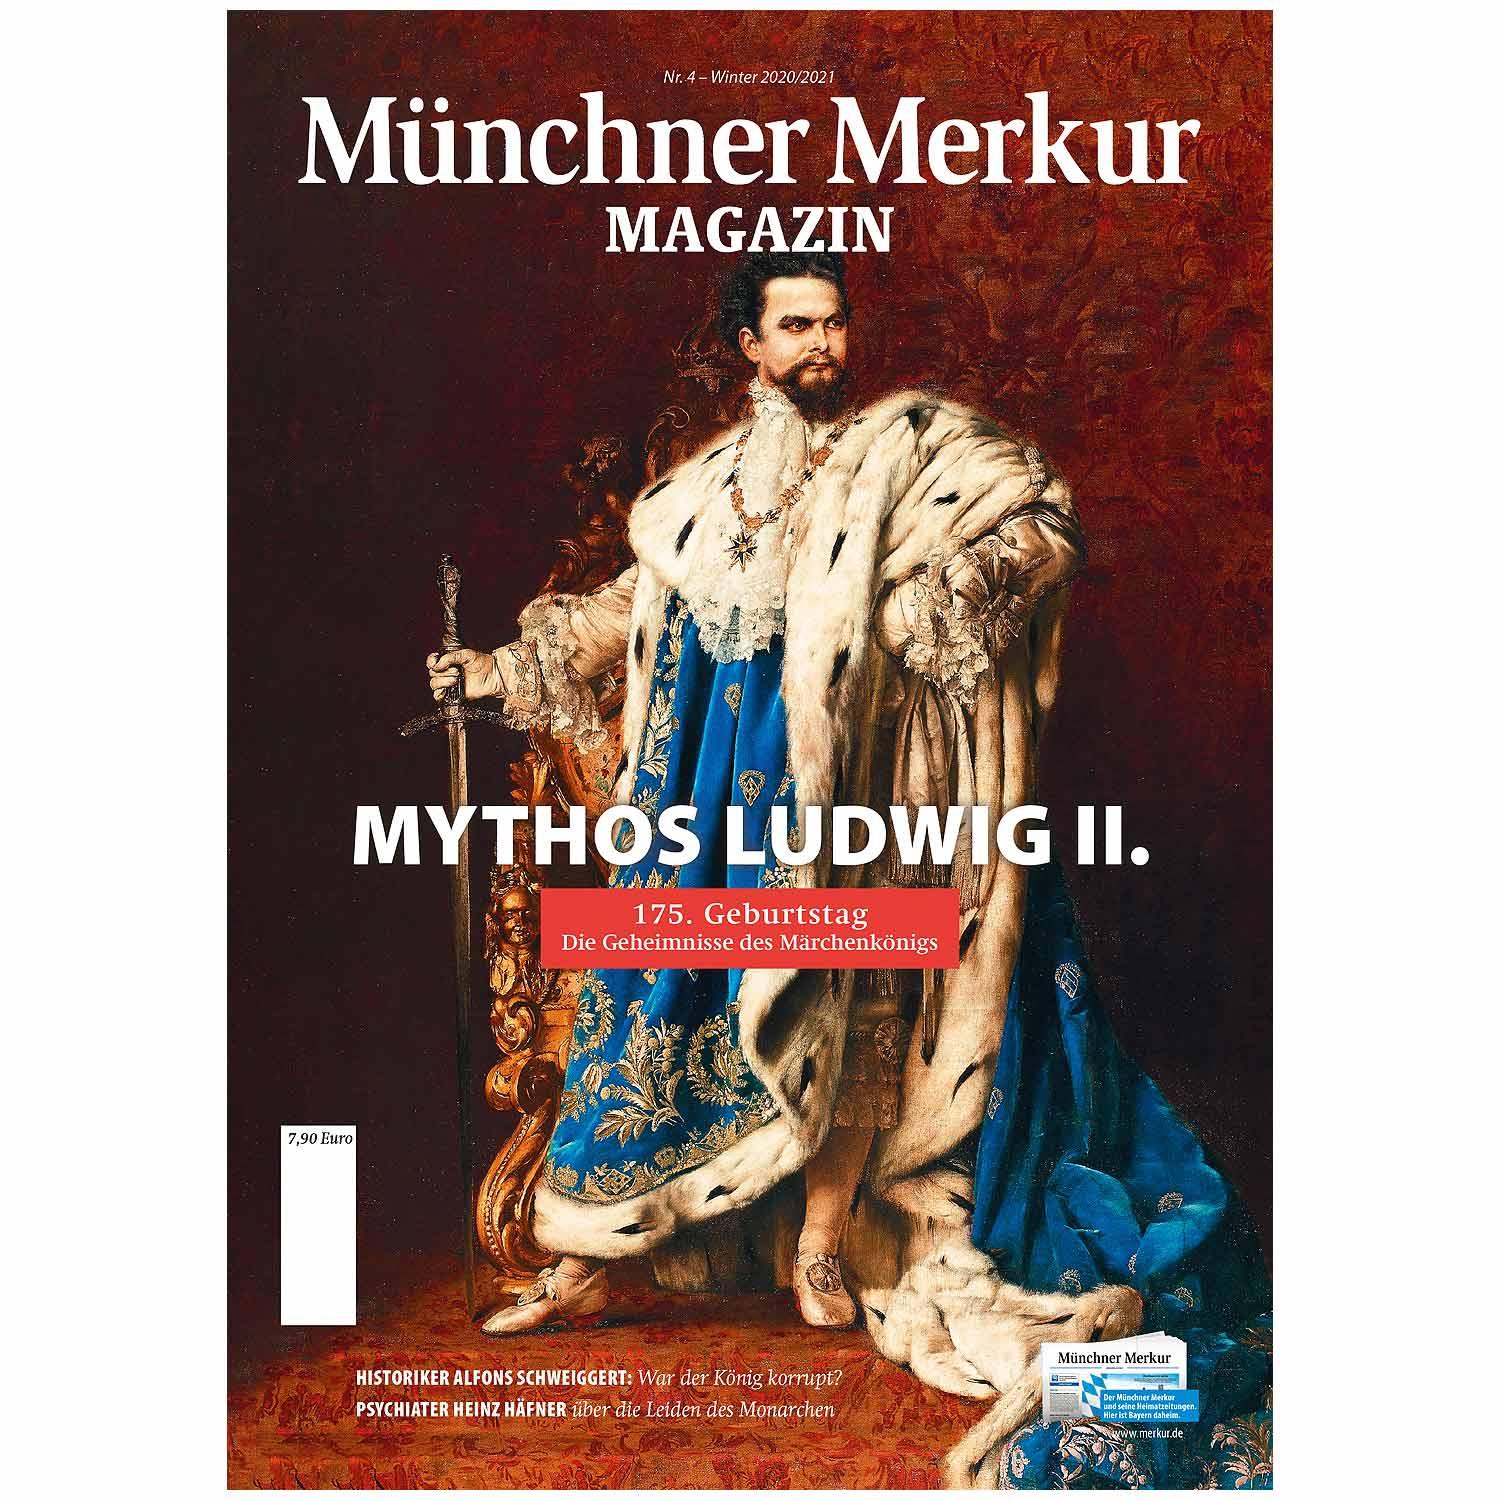 Magazin "Mythos Ludwig II." - bavariashop - mei LebensGfui